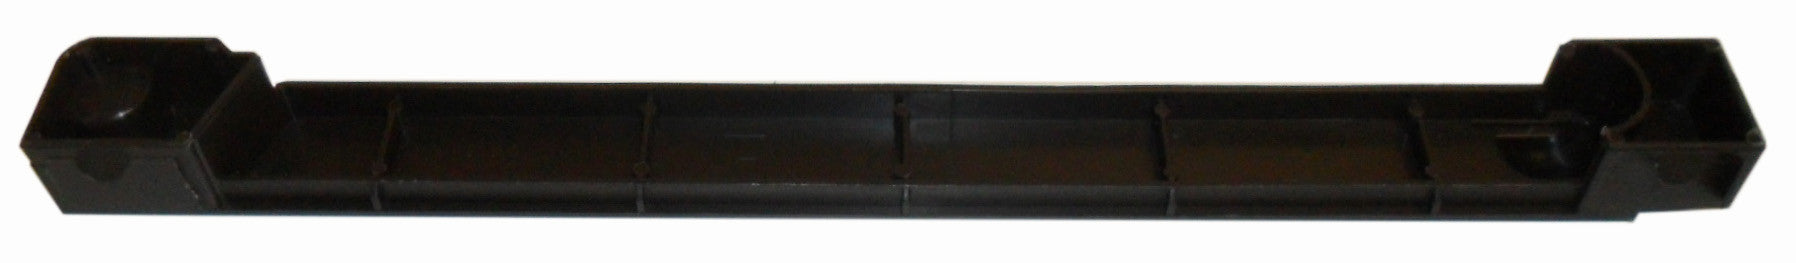 Zz-armadio keter p/scope brown-(glx2)